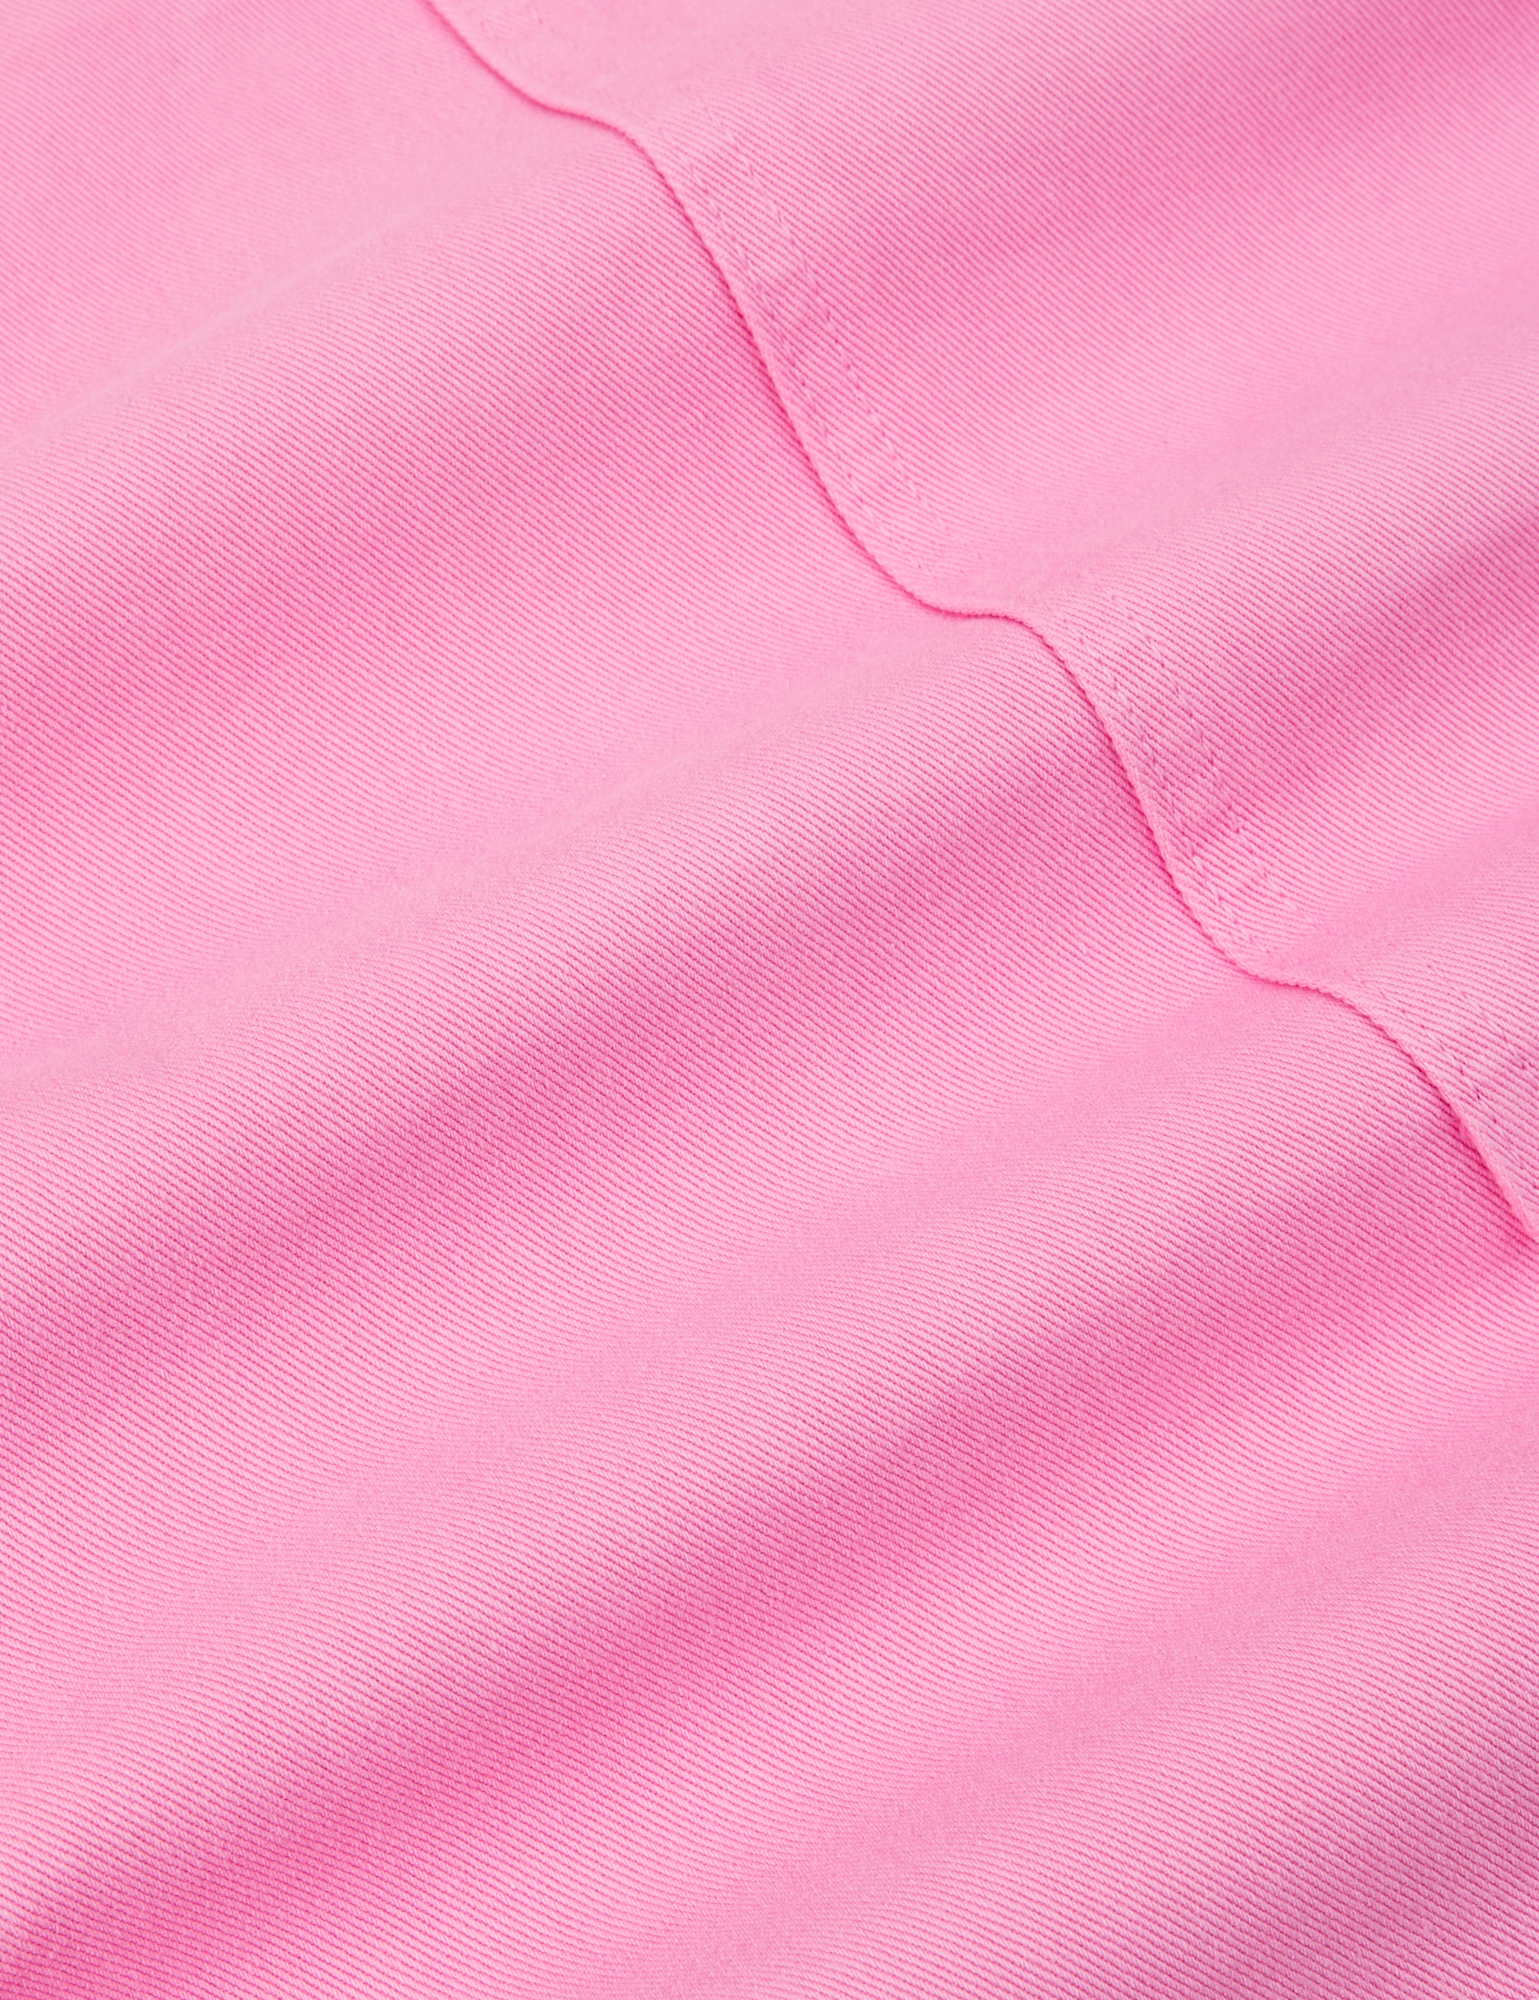 Classic Work Shorts in Bubblegum Pink fabric detail close up